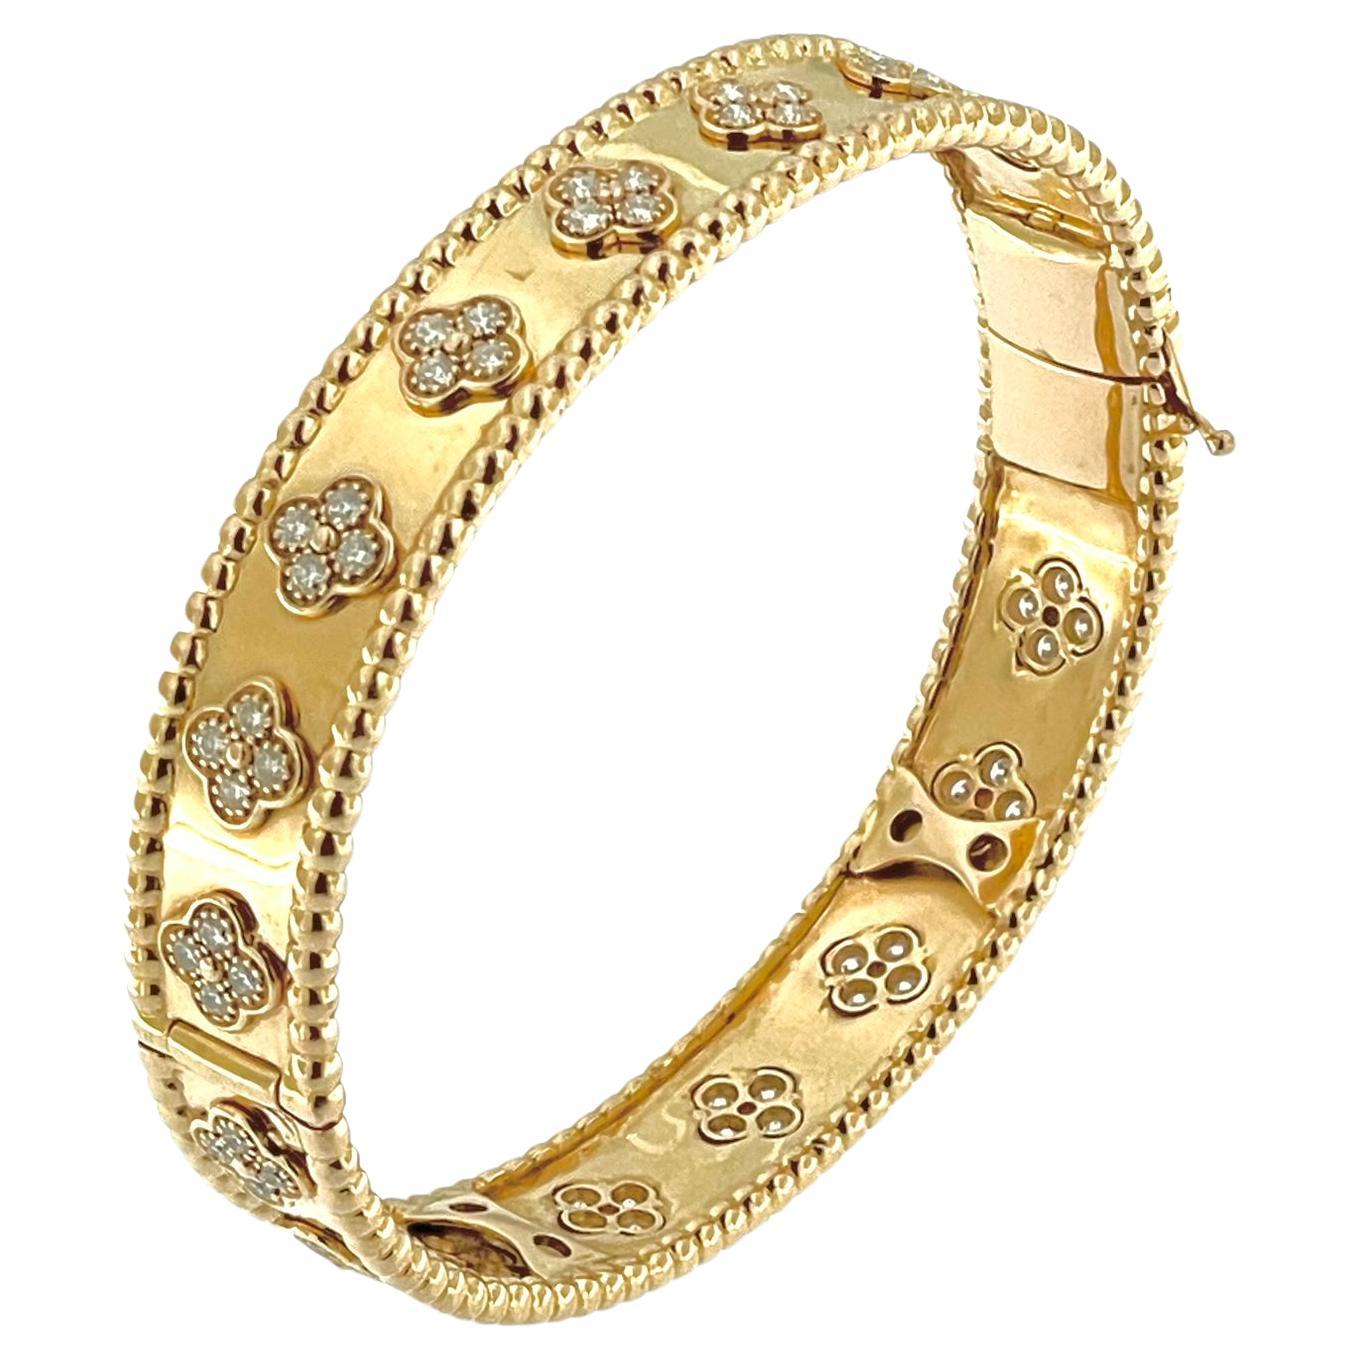 Van Cleef & Arpels Perle Clovers Bracelet Rose Gold and Diamonds